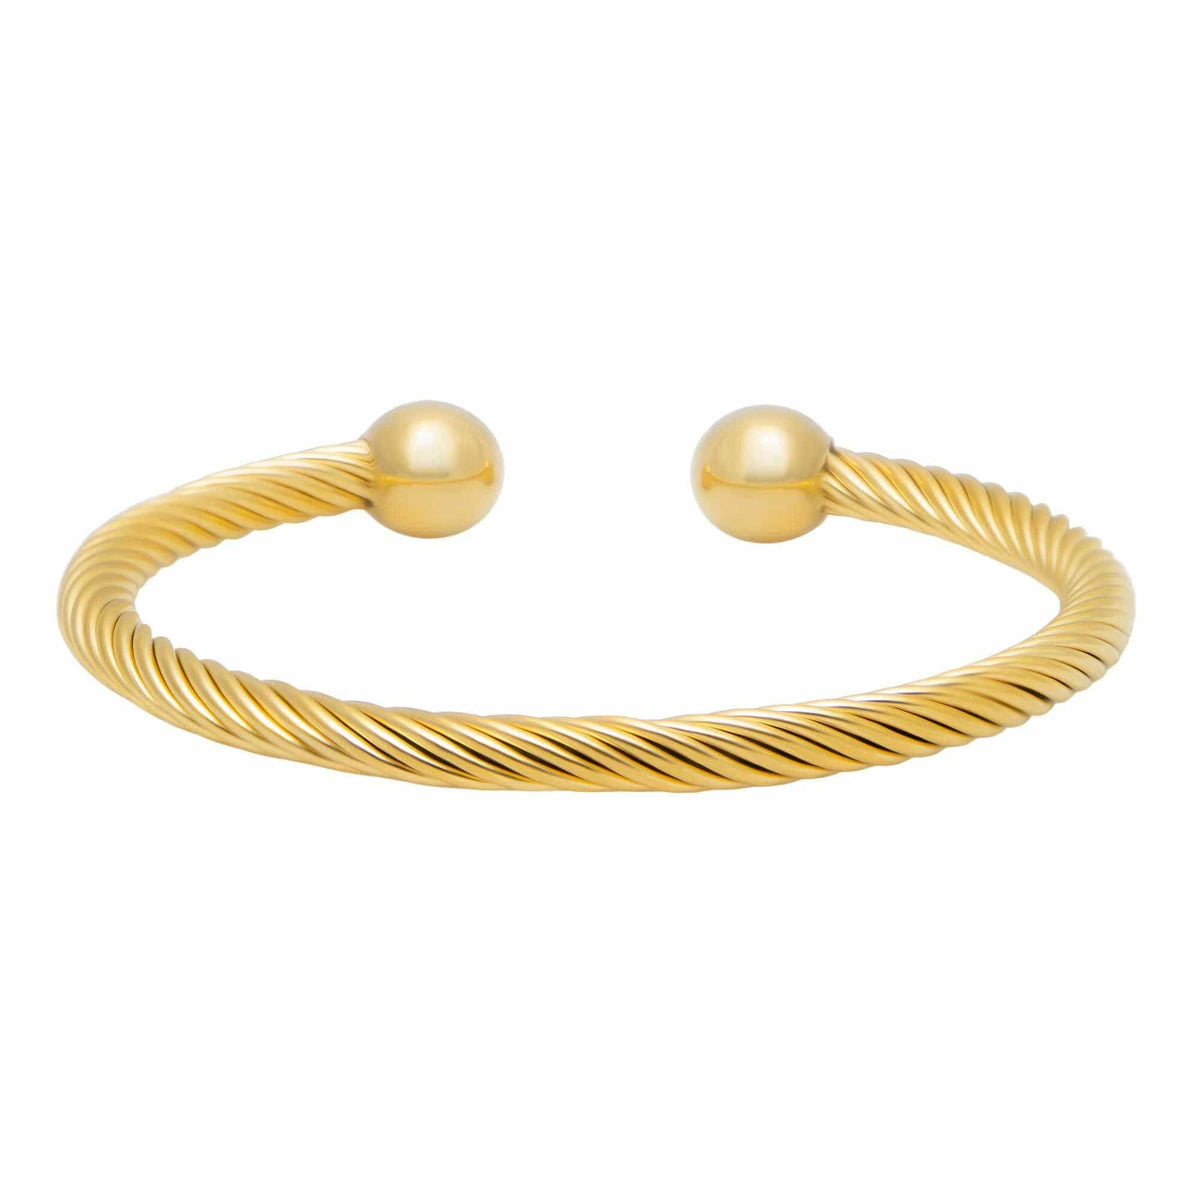 BohoMoon Stainless Steel Mariana Cuff Bracelet Gold